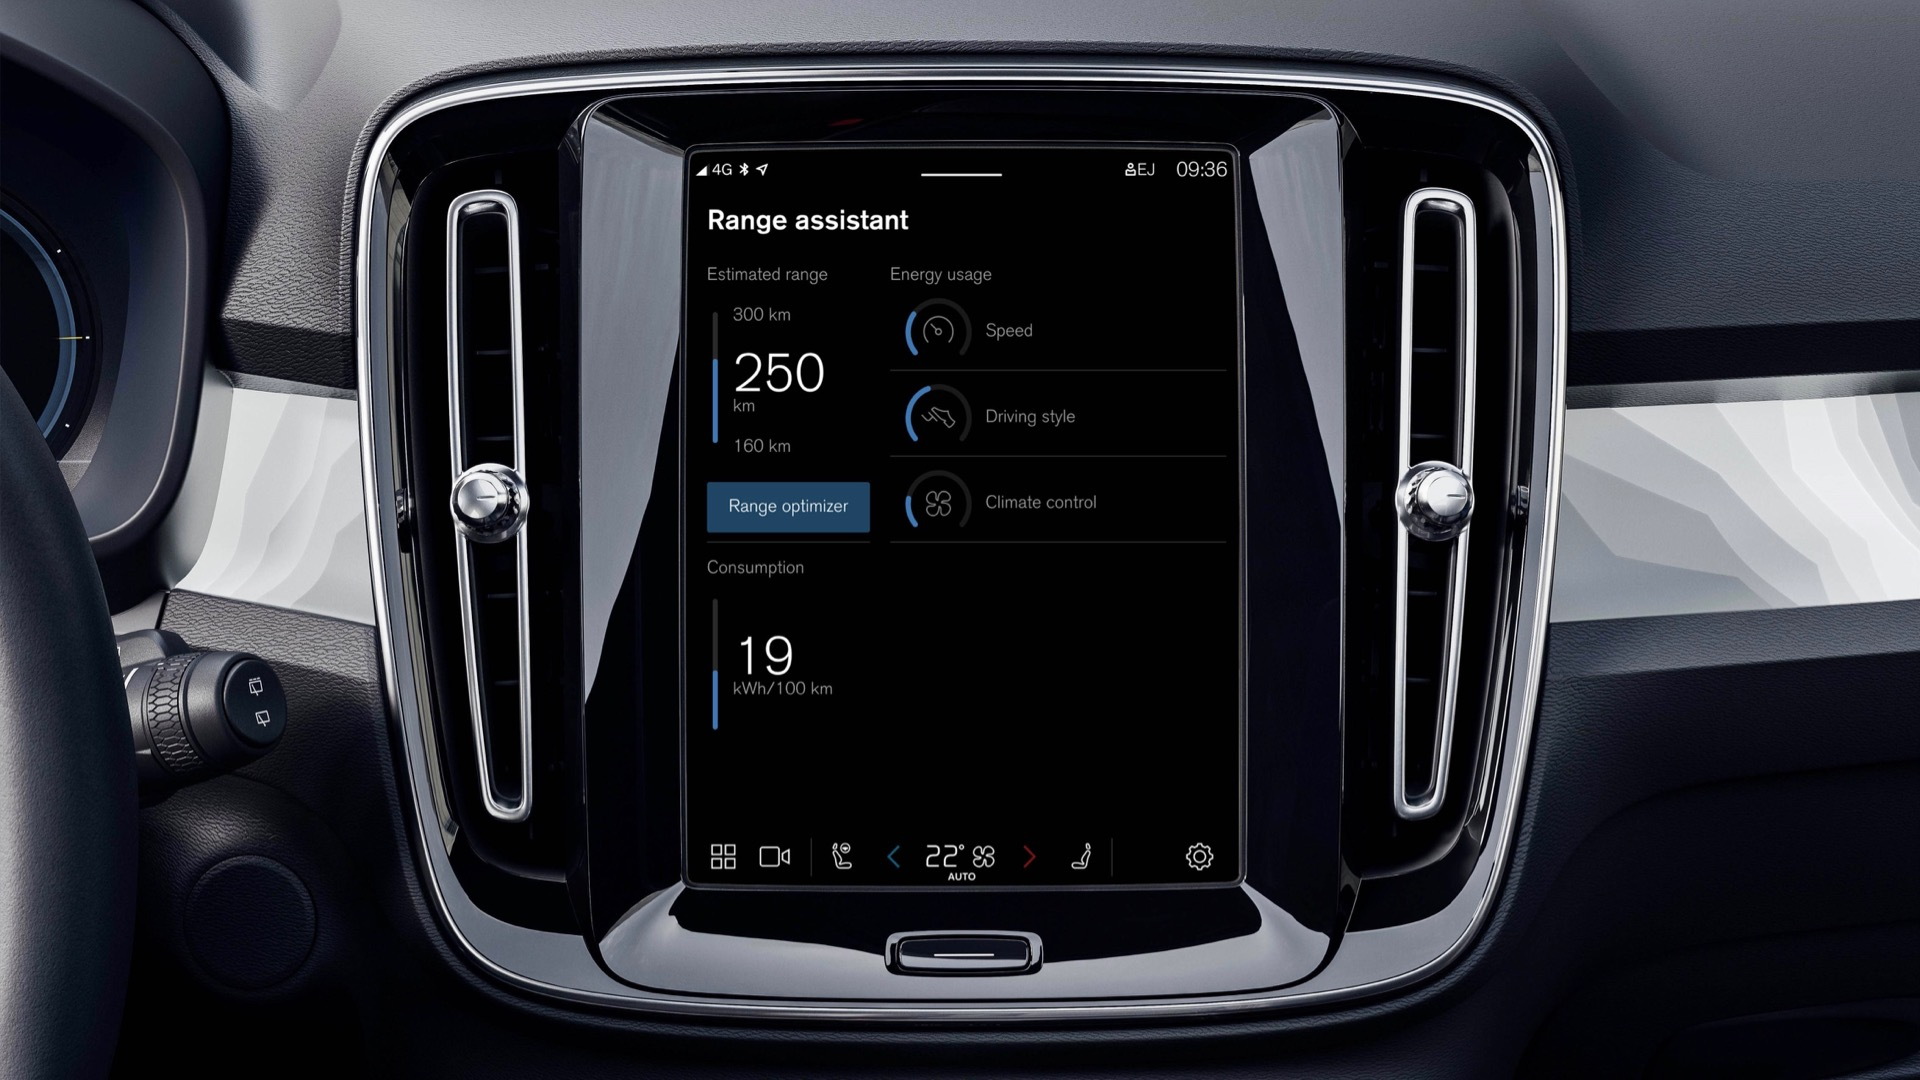 Volvo Range Assistant app